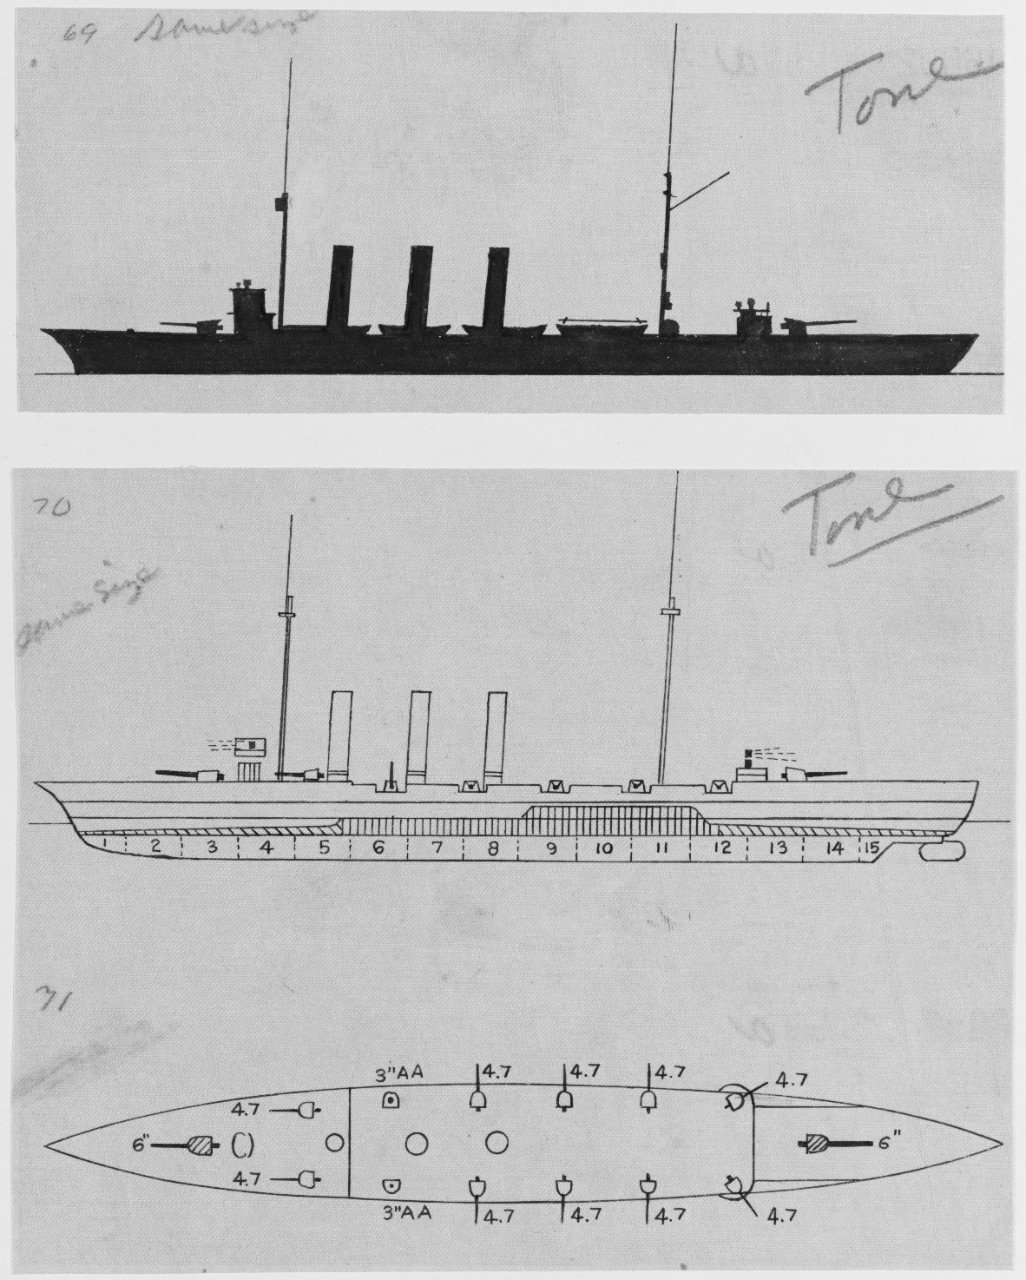 Drawings of Japanese Light Cruiser TONE (1904-1933) in February 1925